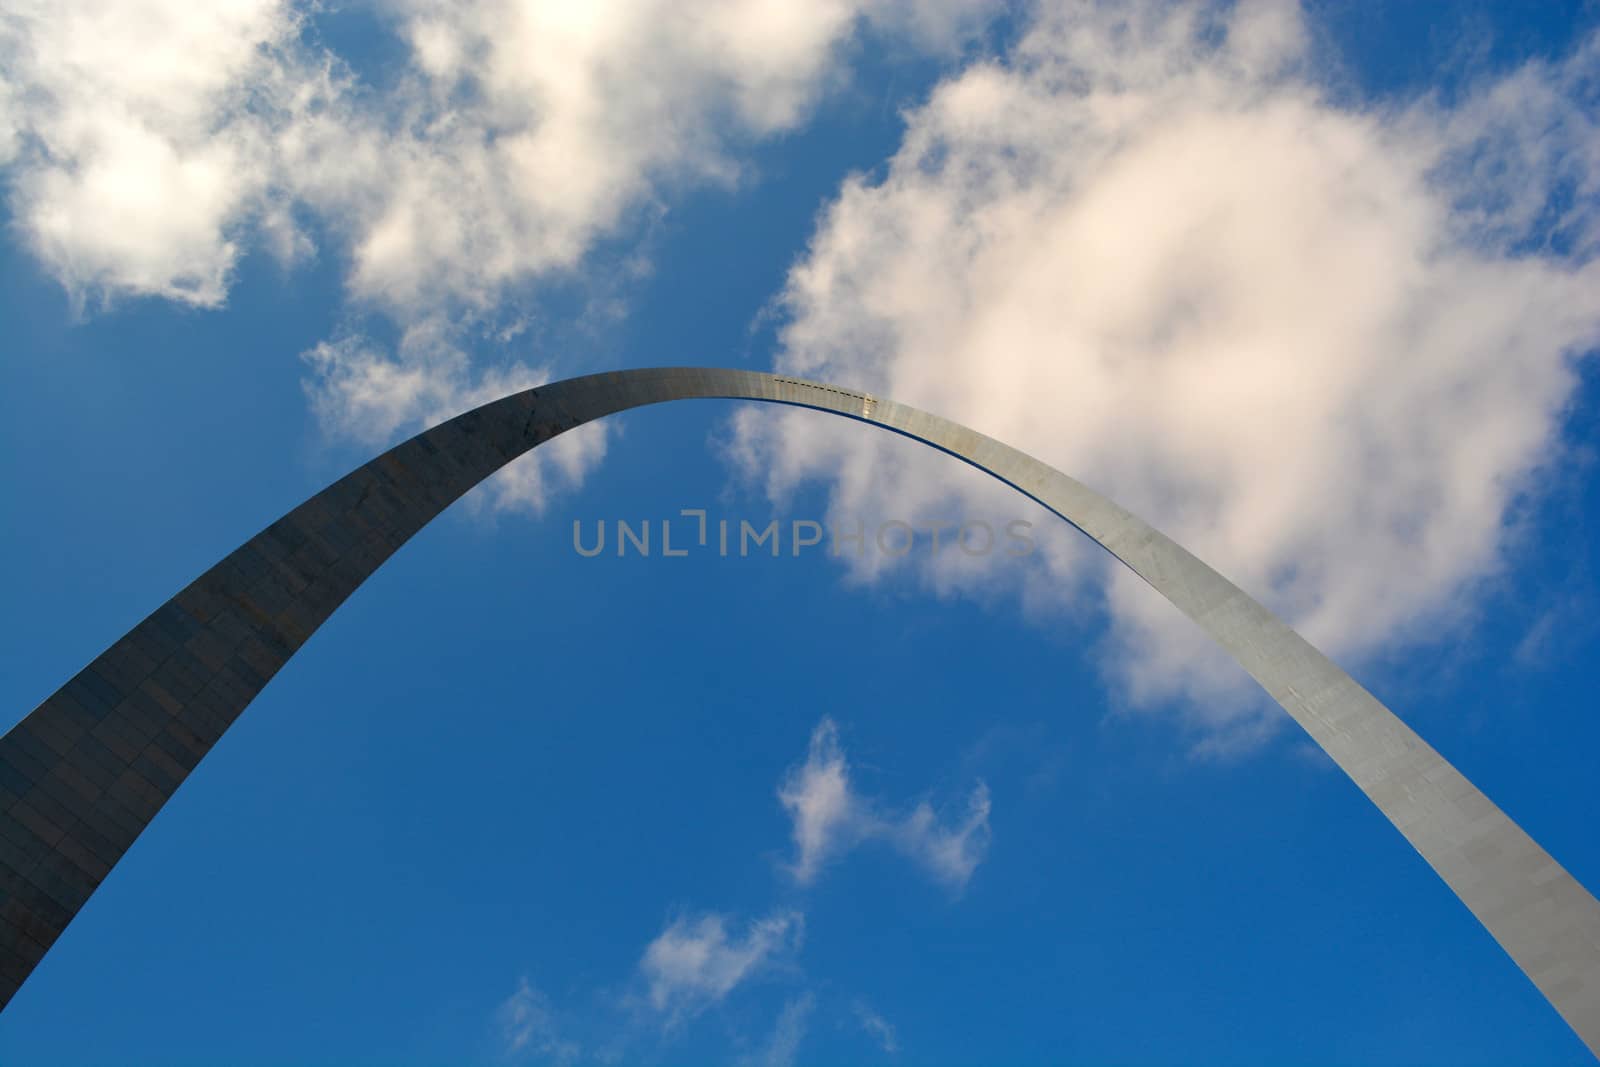 The Saint Louis Arch - A National Landmark in Missouri, USA